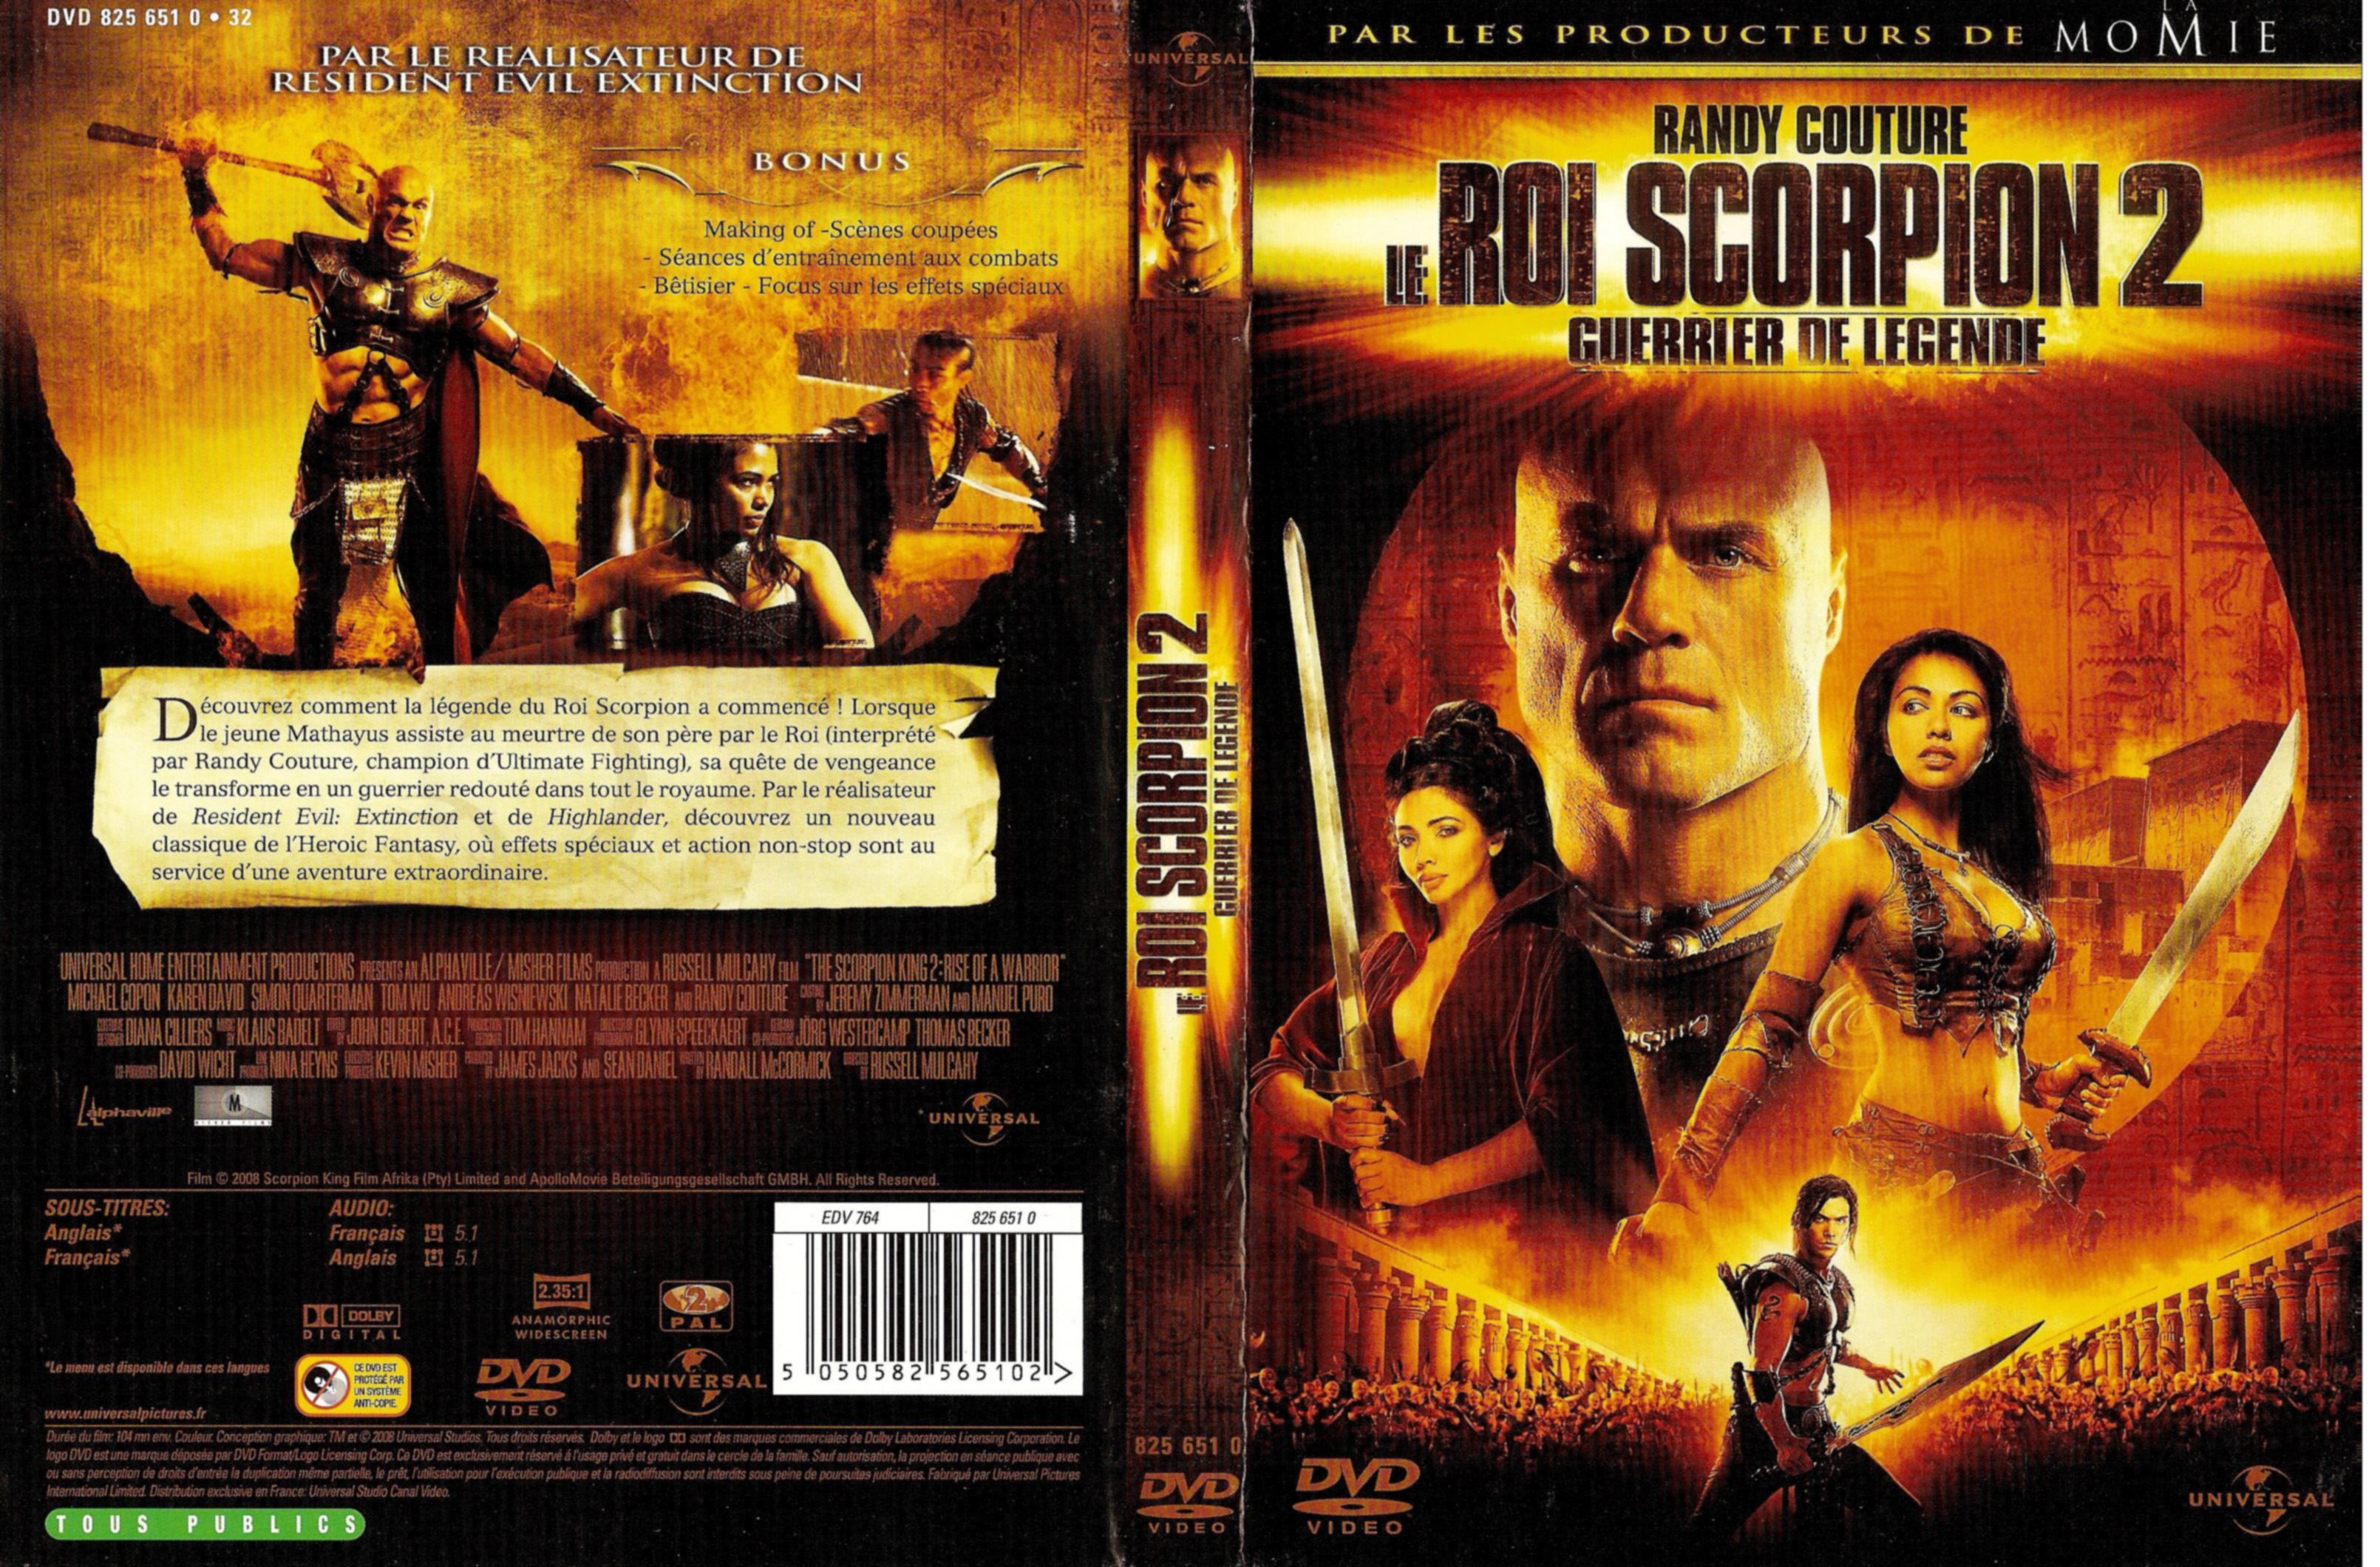 Jaquette DVD Le roi scorpion 2 v2